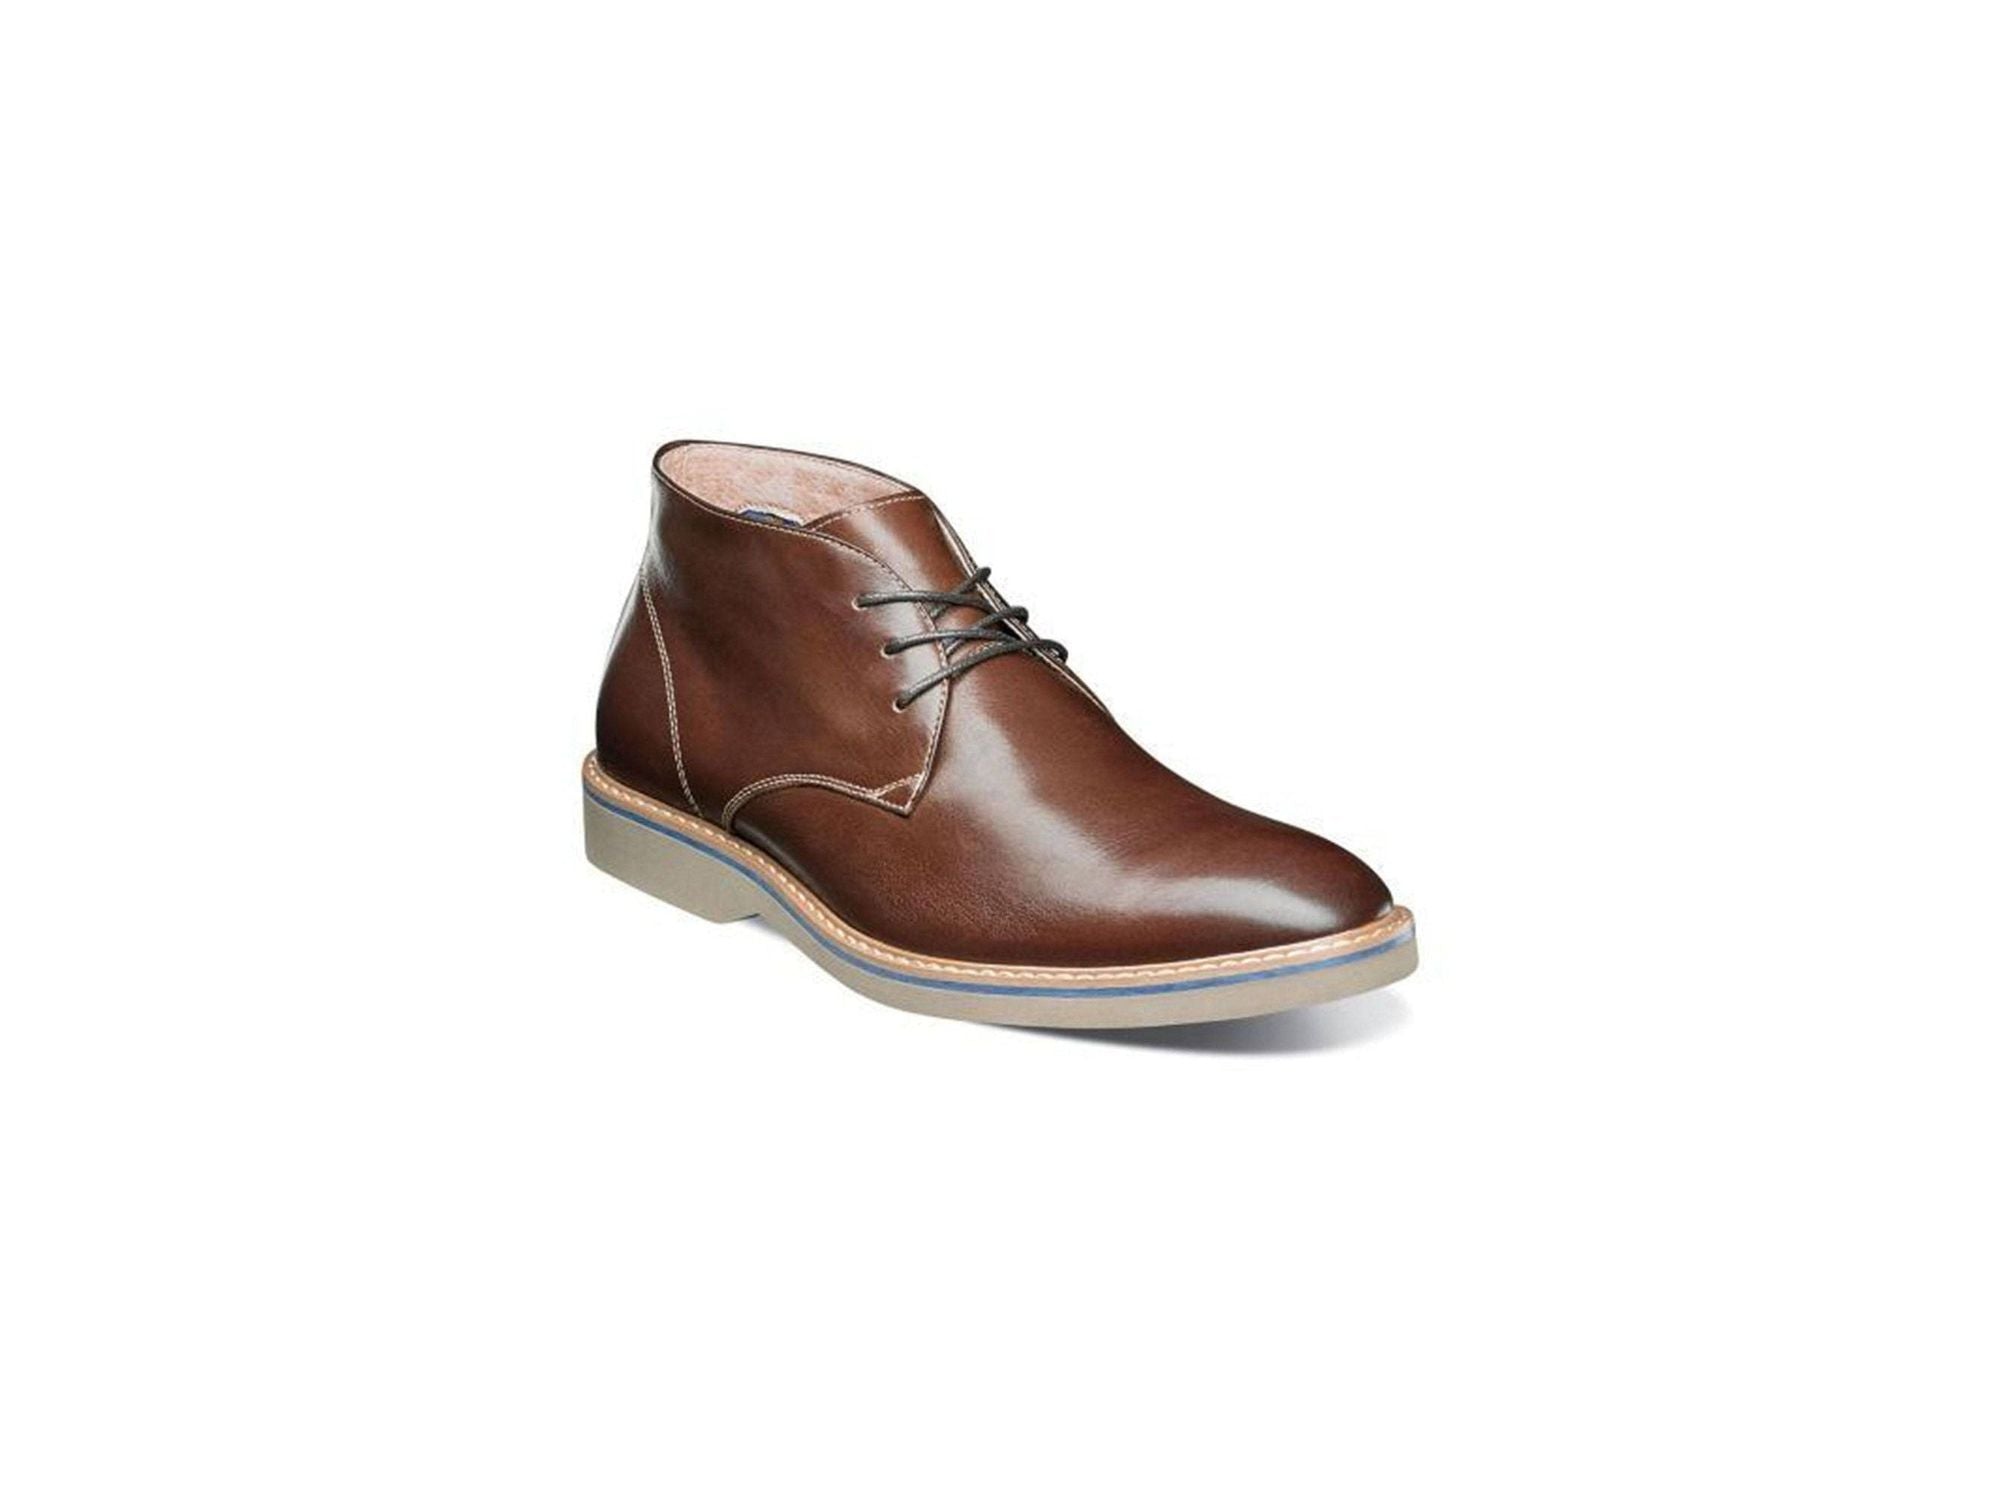 Florsheim Union Plain Toe Chukka Boot in Chocolate - Rainwater's Men's Clothing and Tuxedo Rental